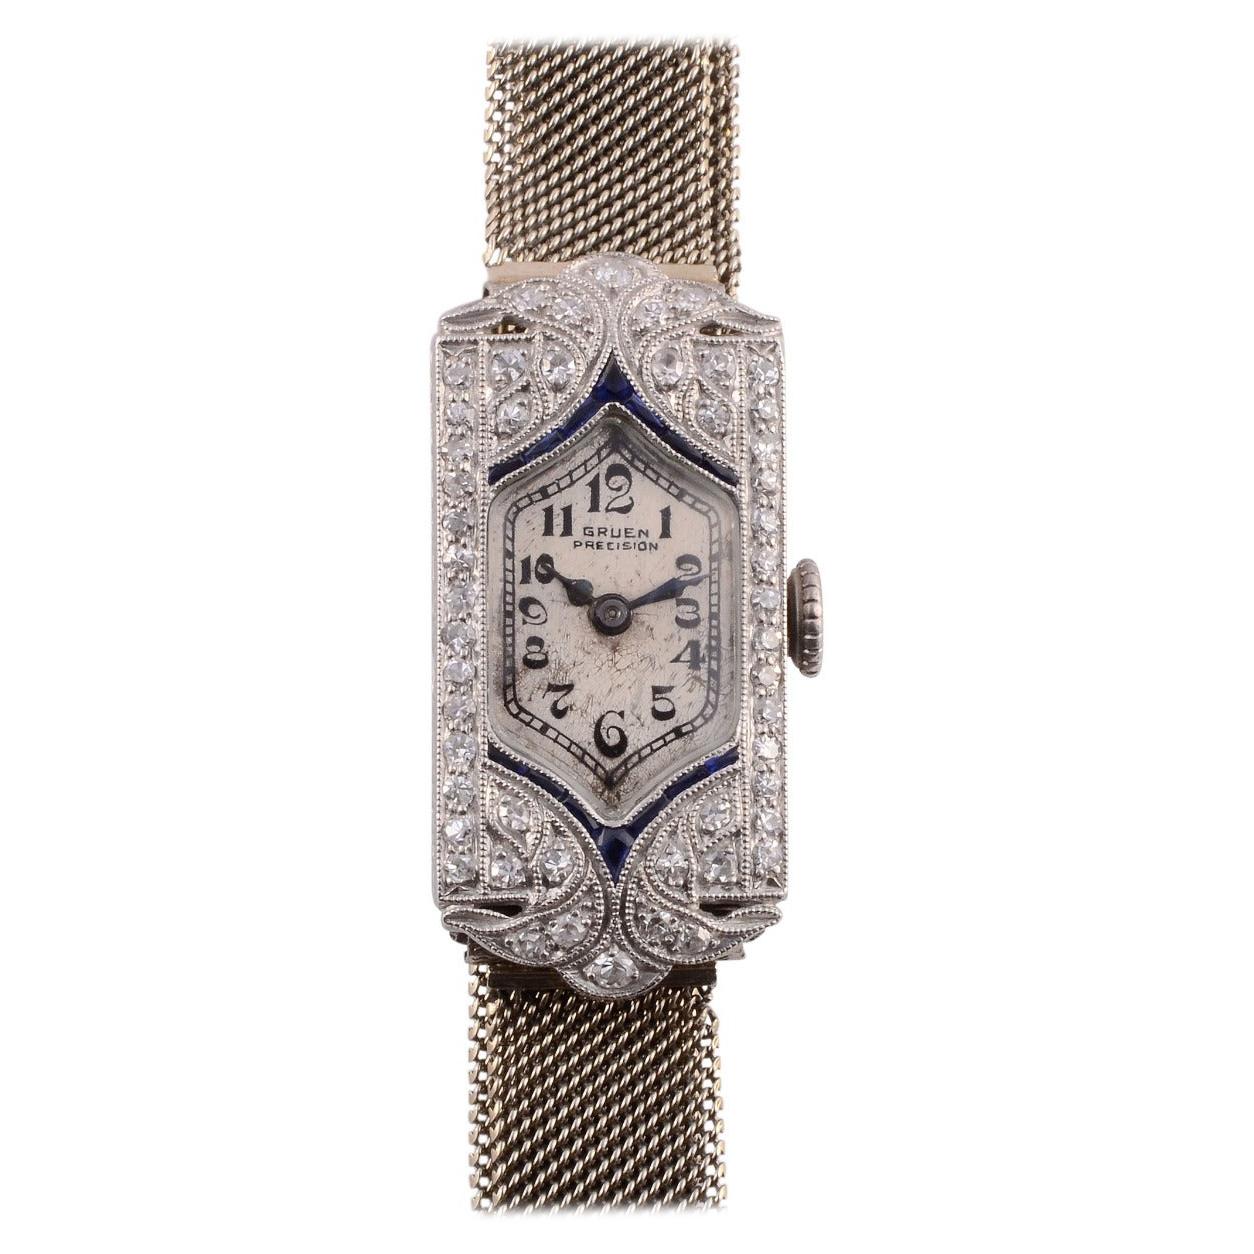 Gruen Platinum Diamond and Sapphire Wrist Watch